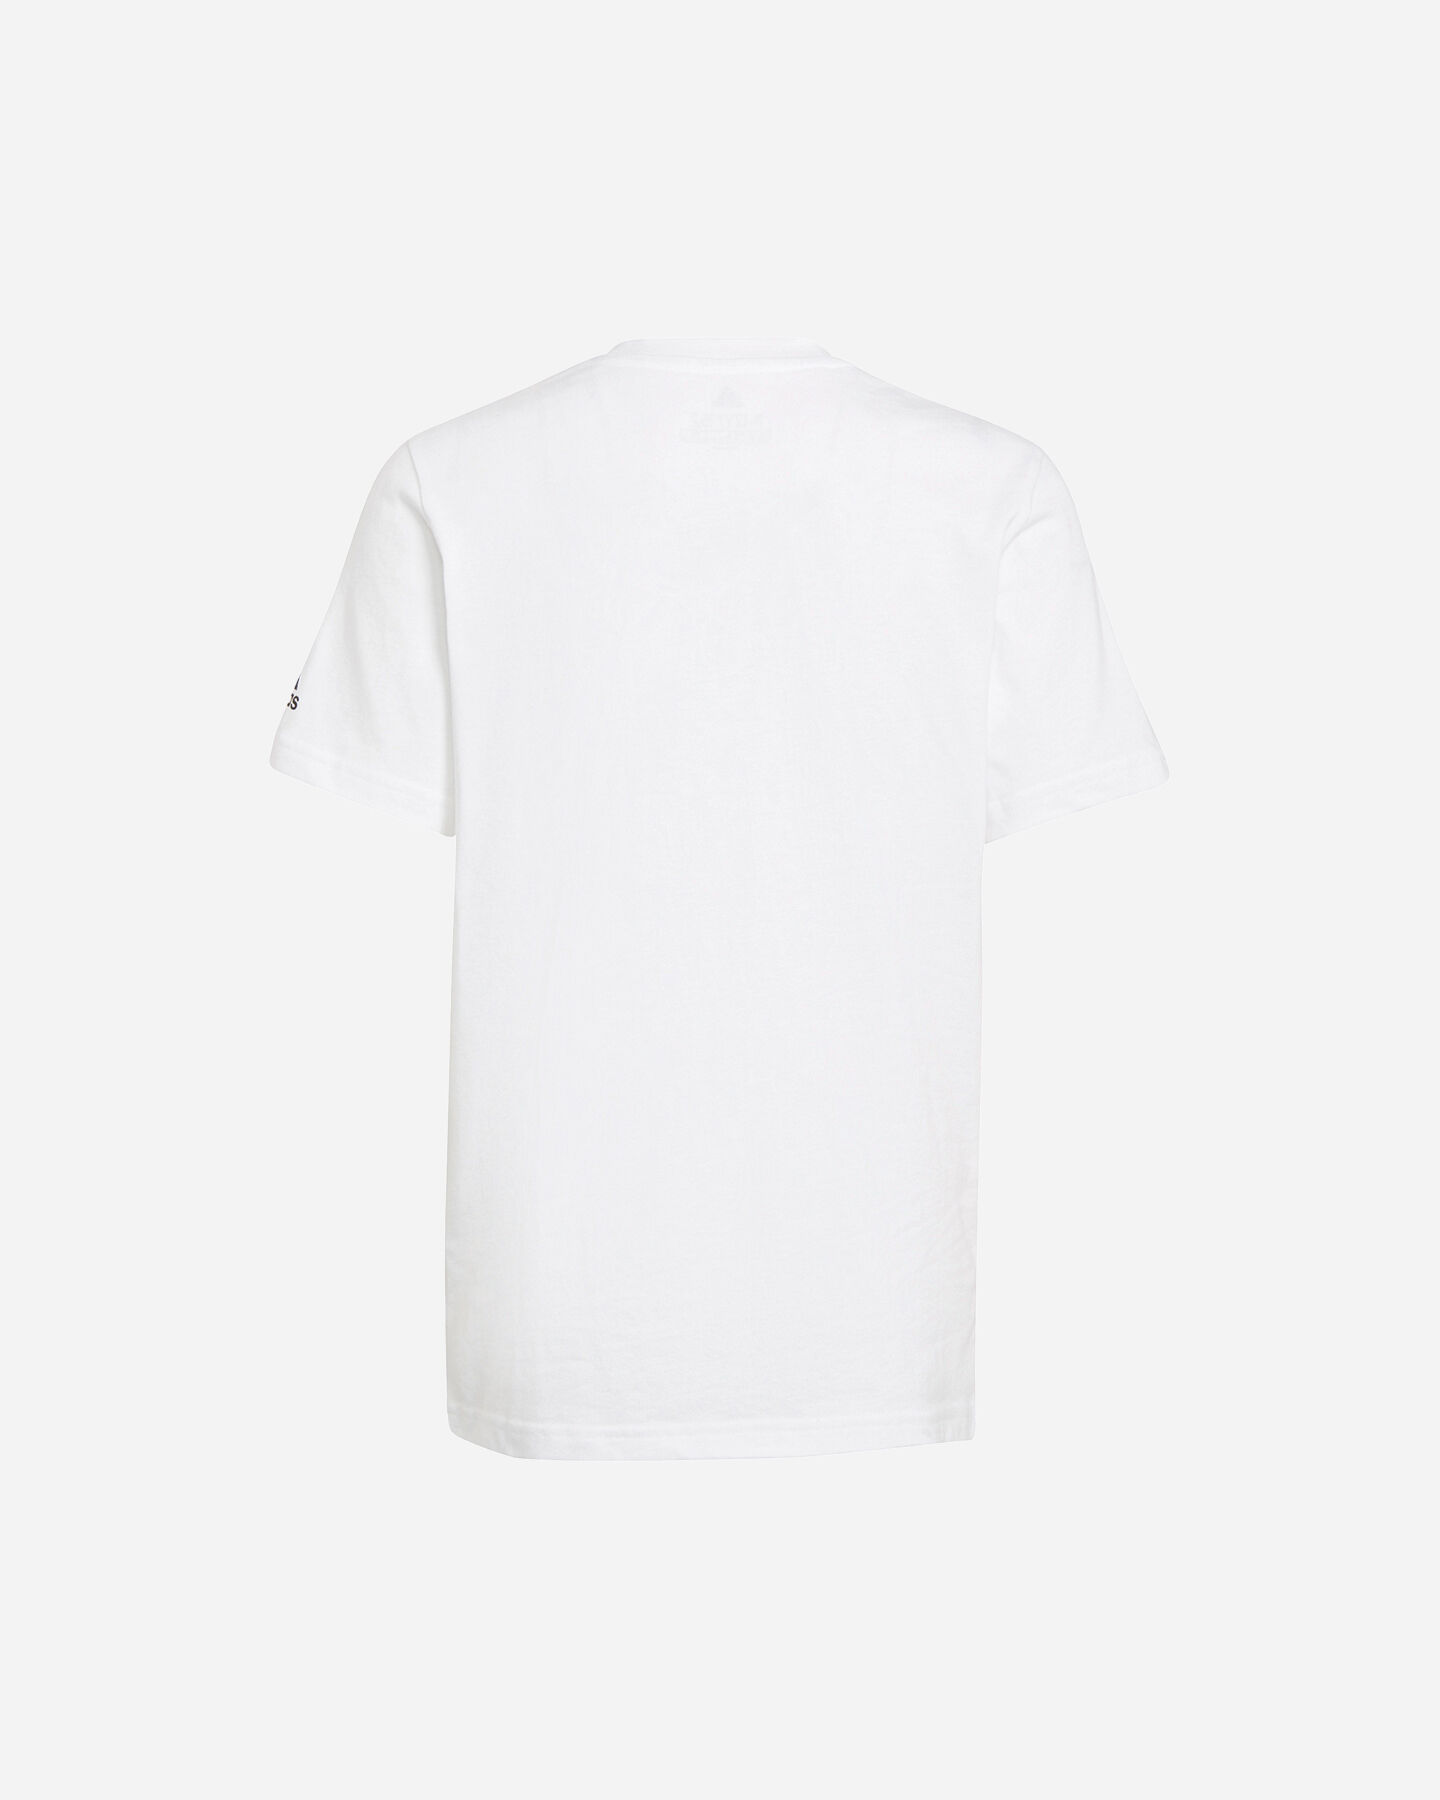  T-Shirt ADIDAS GRAFIC JR S5378400|UNI|7-8A scatto 1